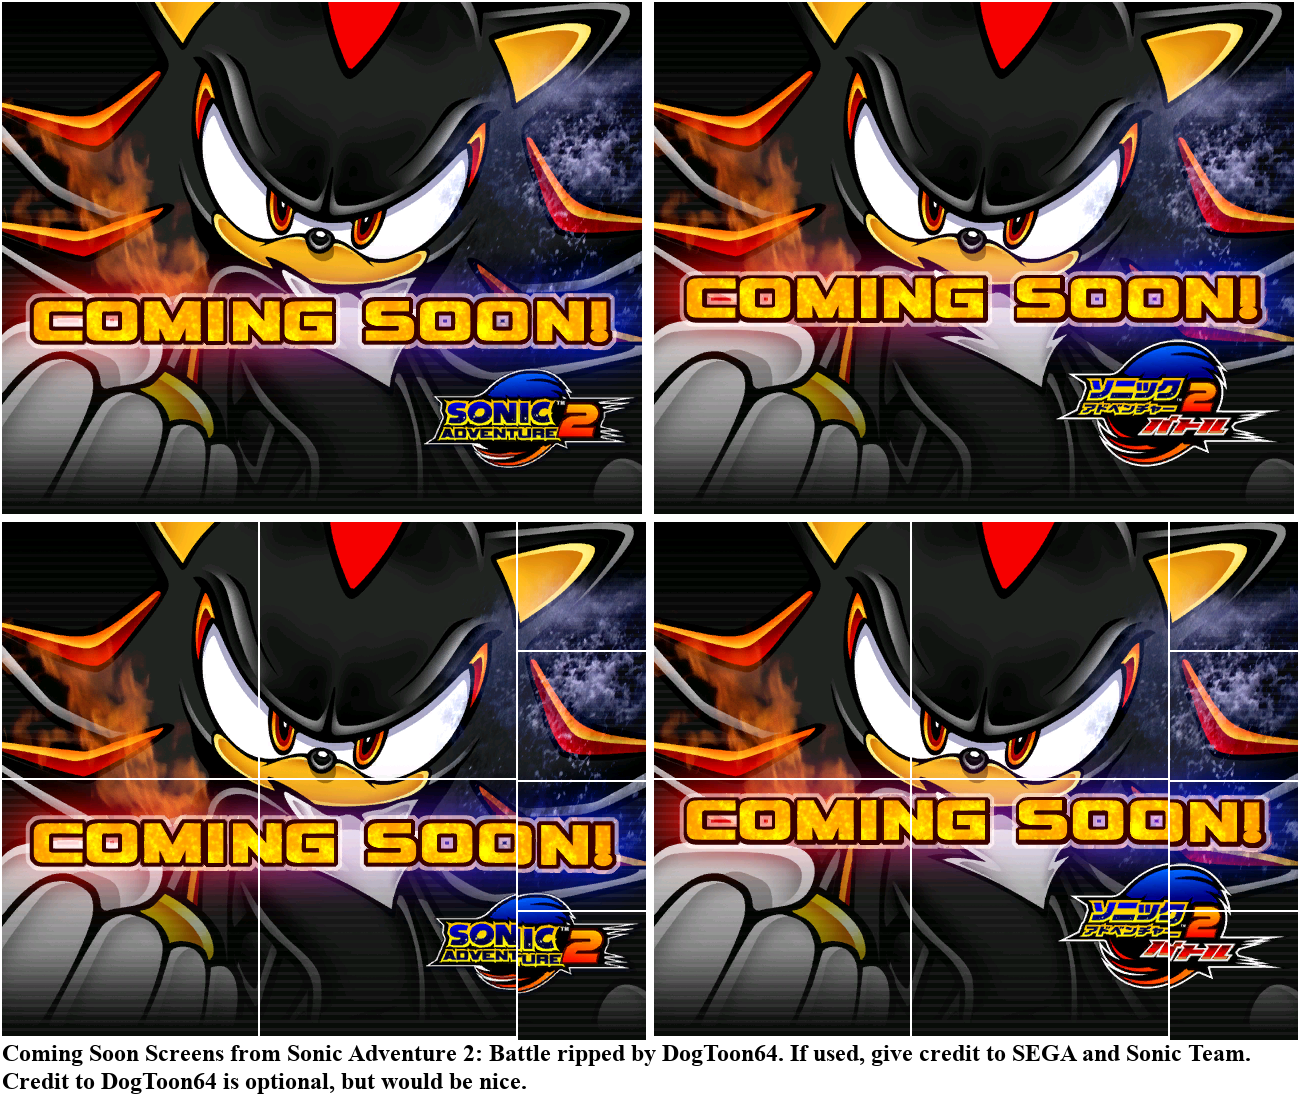 Sonic Adventure 2: Battle - Coming Soon Screens